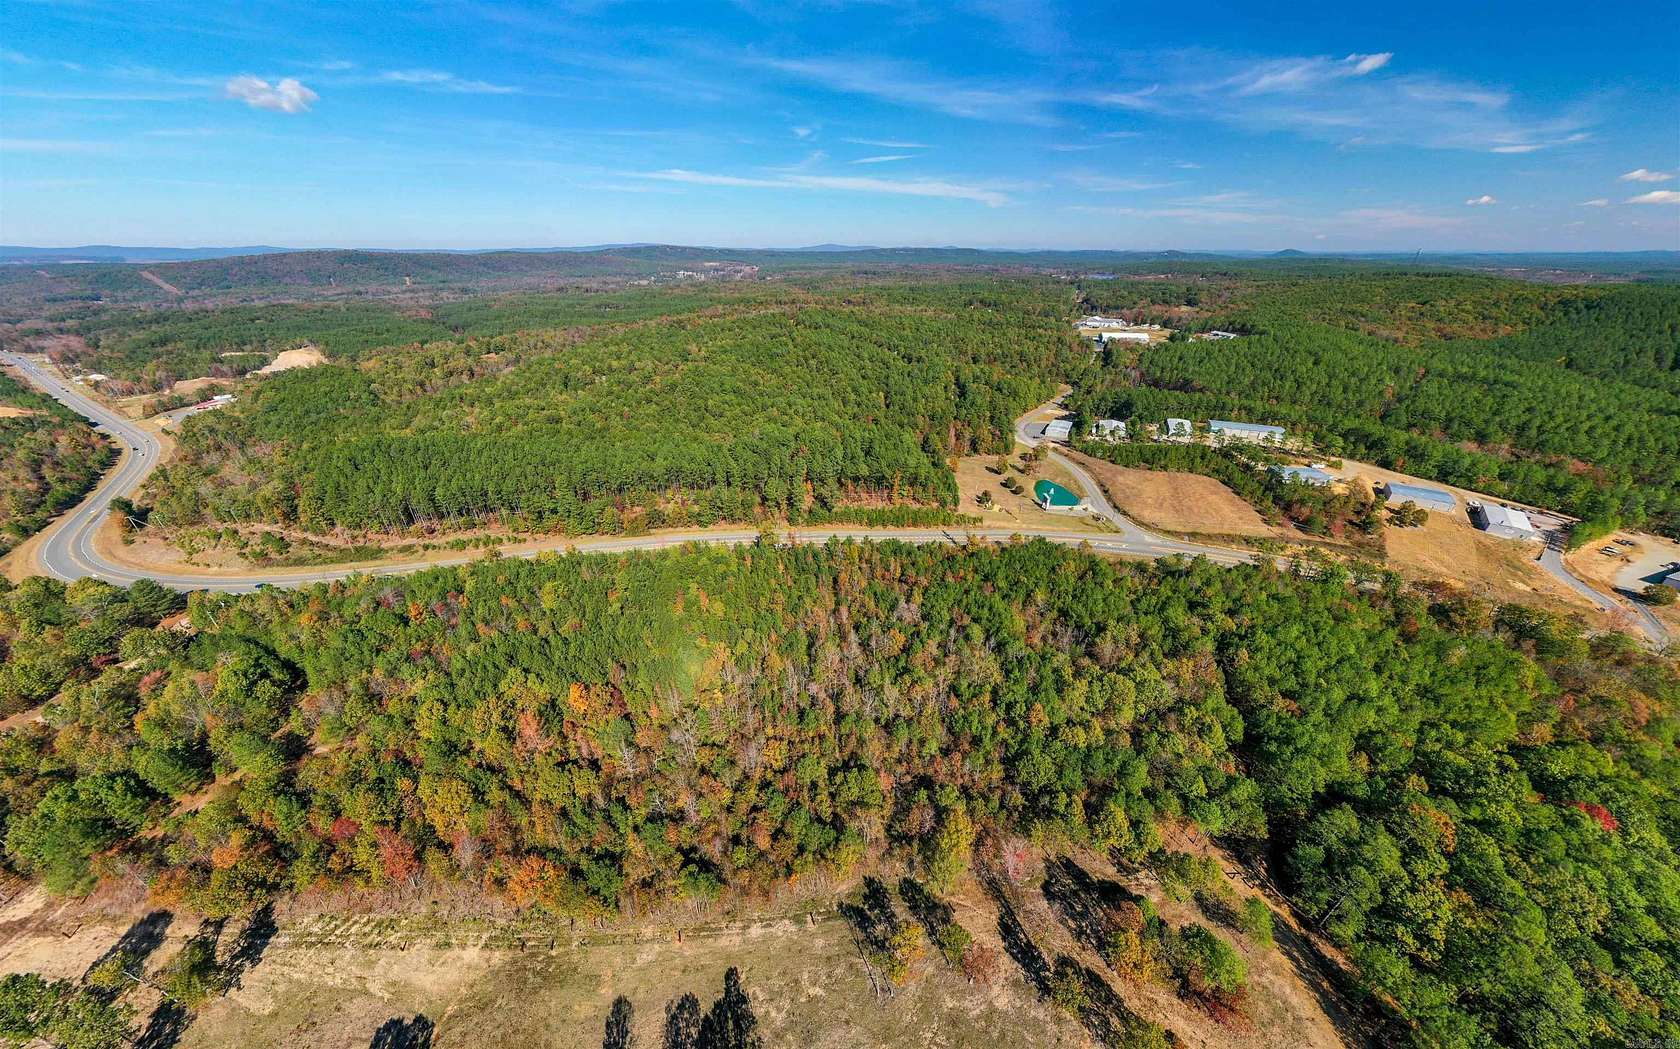 15 Acres of Commercial Land for Sale in Hot Springs Village, Arkansas